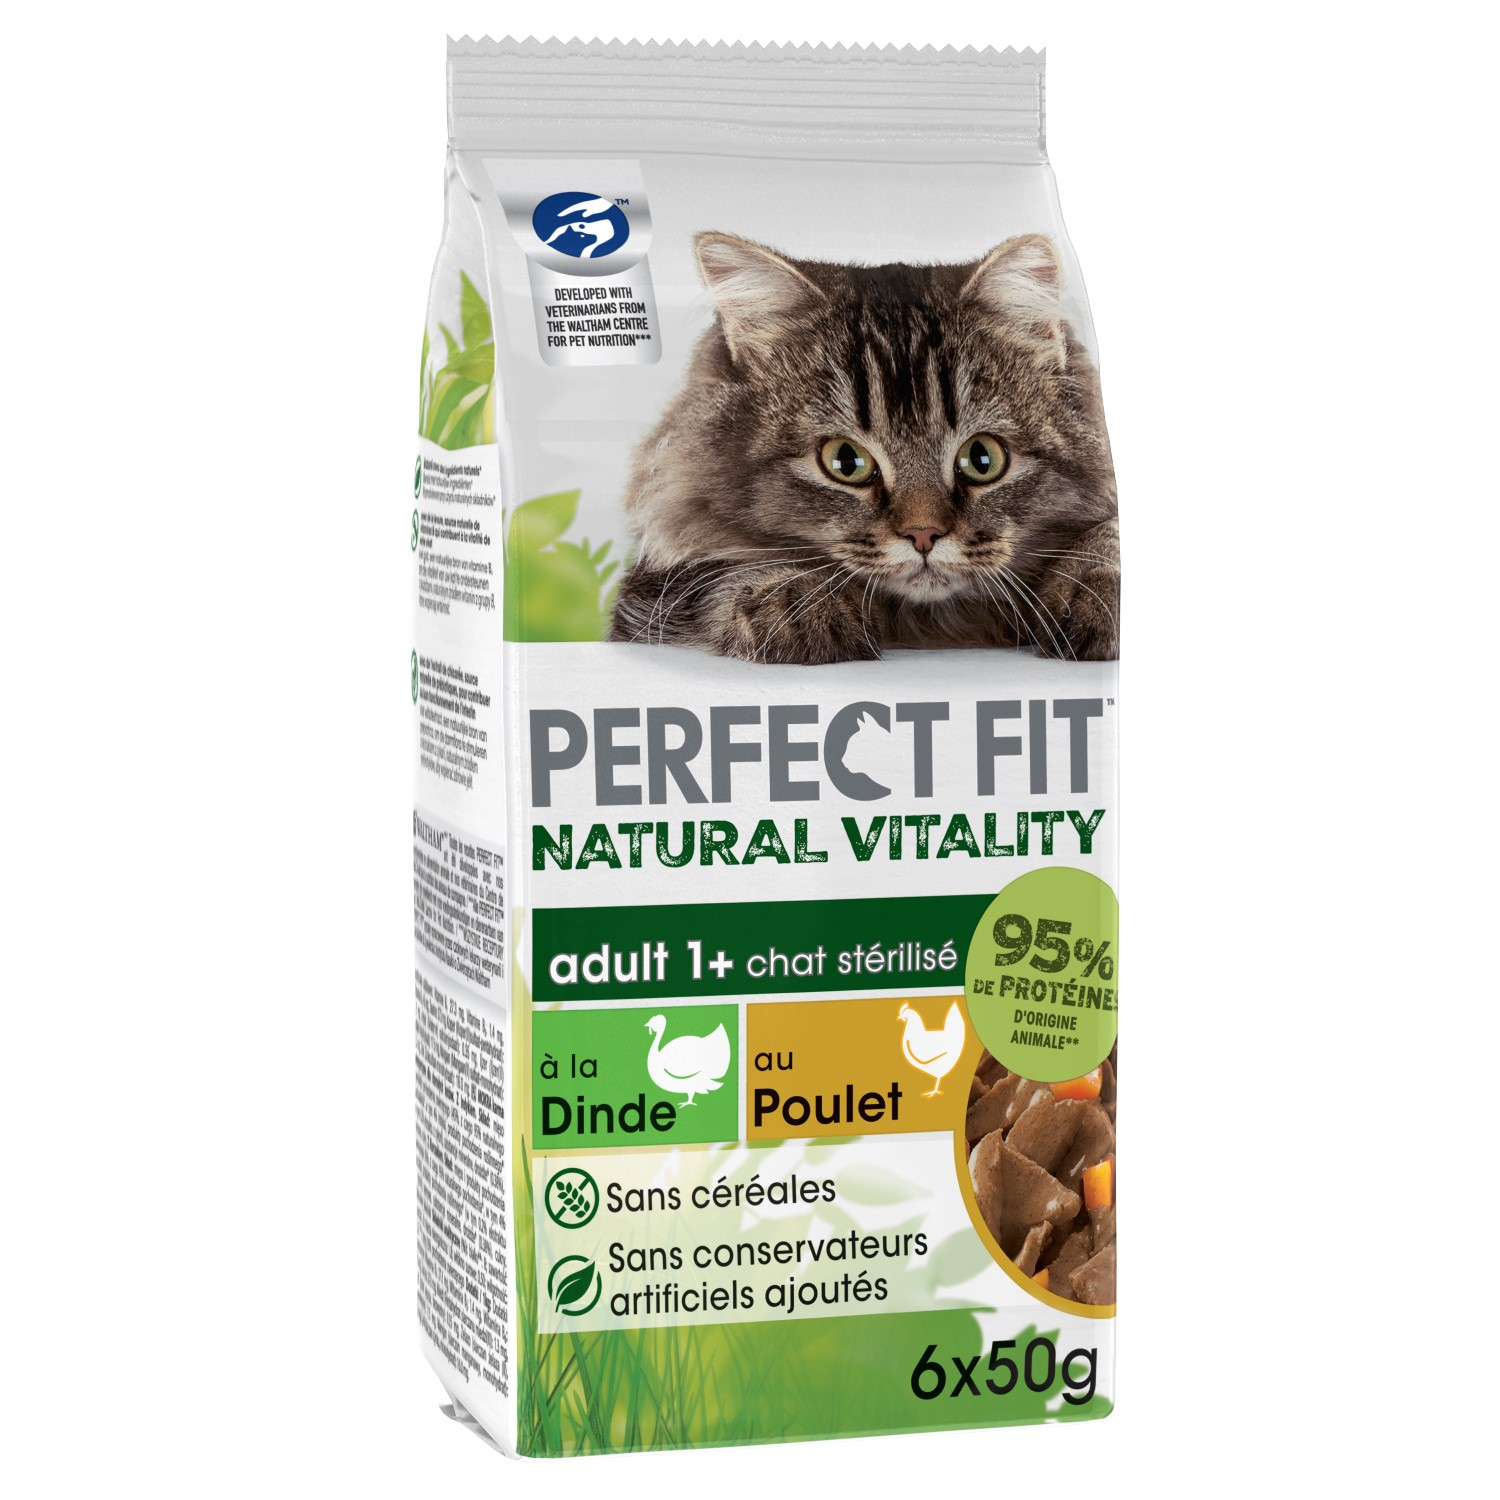 PERFECT FIT NATURAL VITALITY Adult Cat Sterilized, met kip & kalkoen